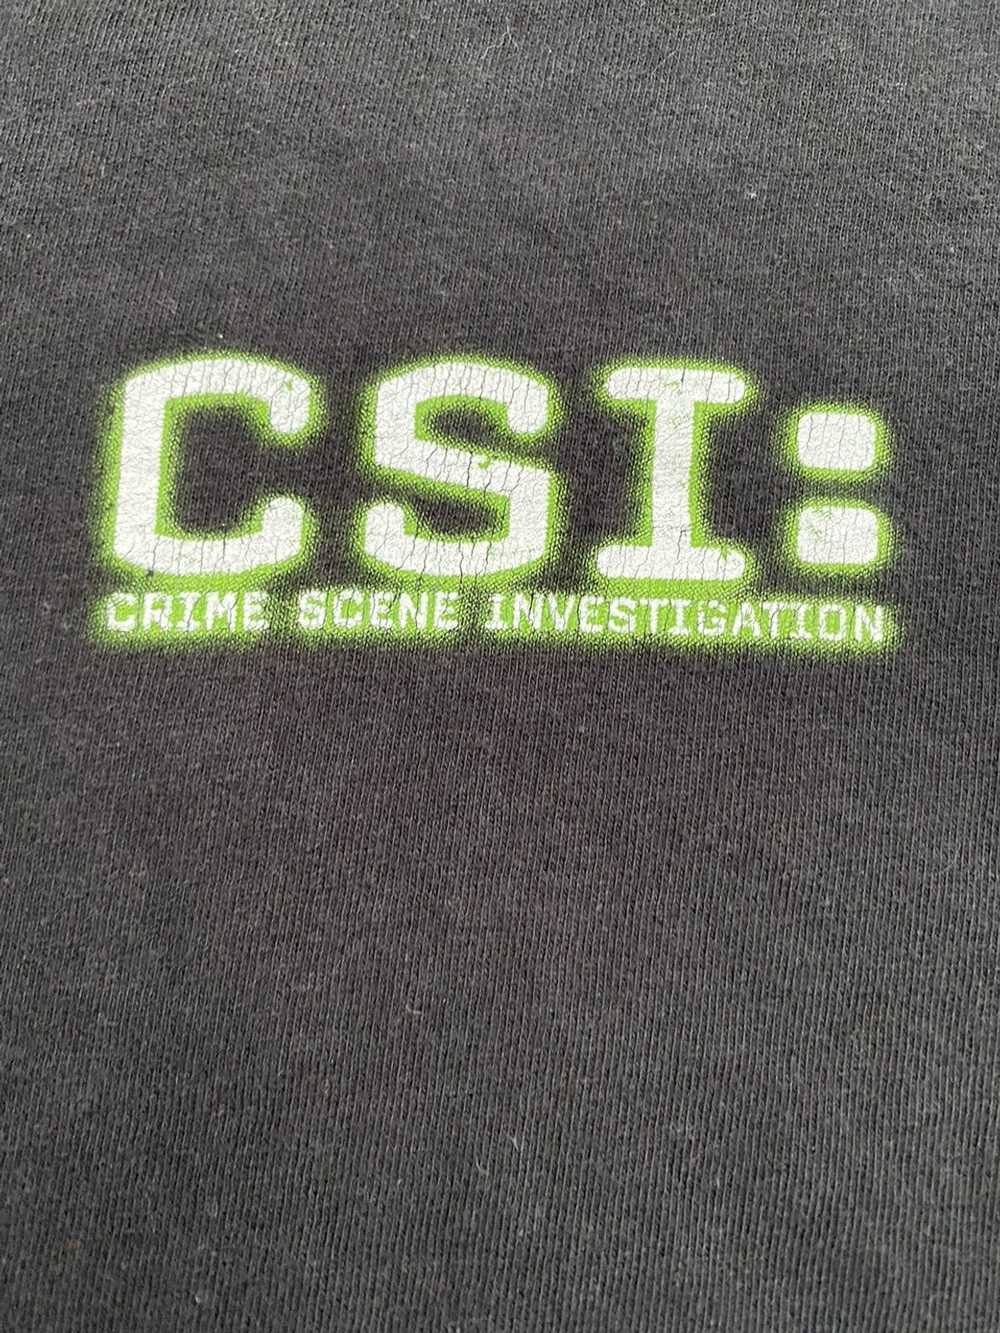 Vintage Vintage 2001 CSI T Shirt - image 5